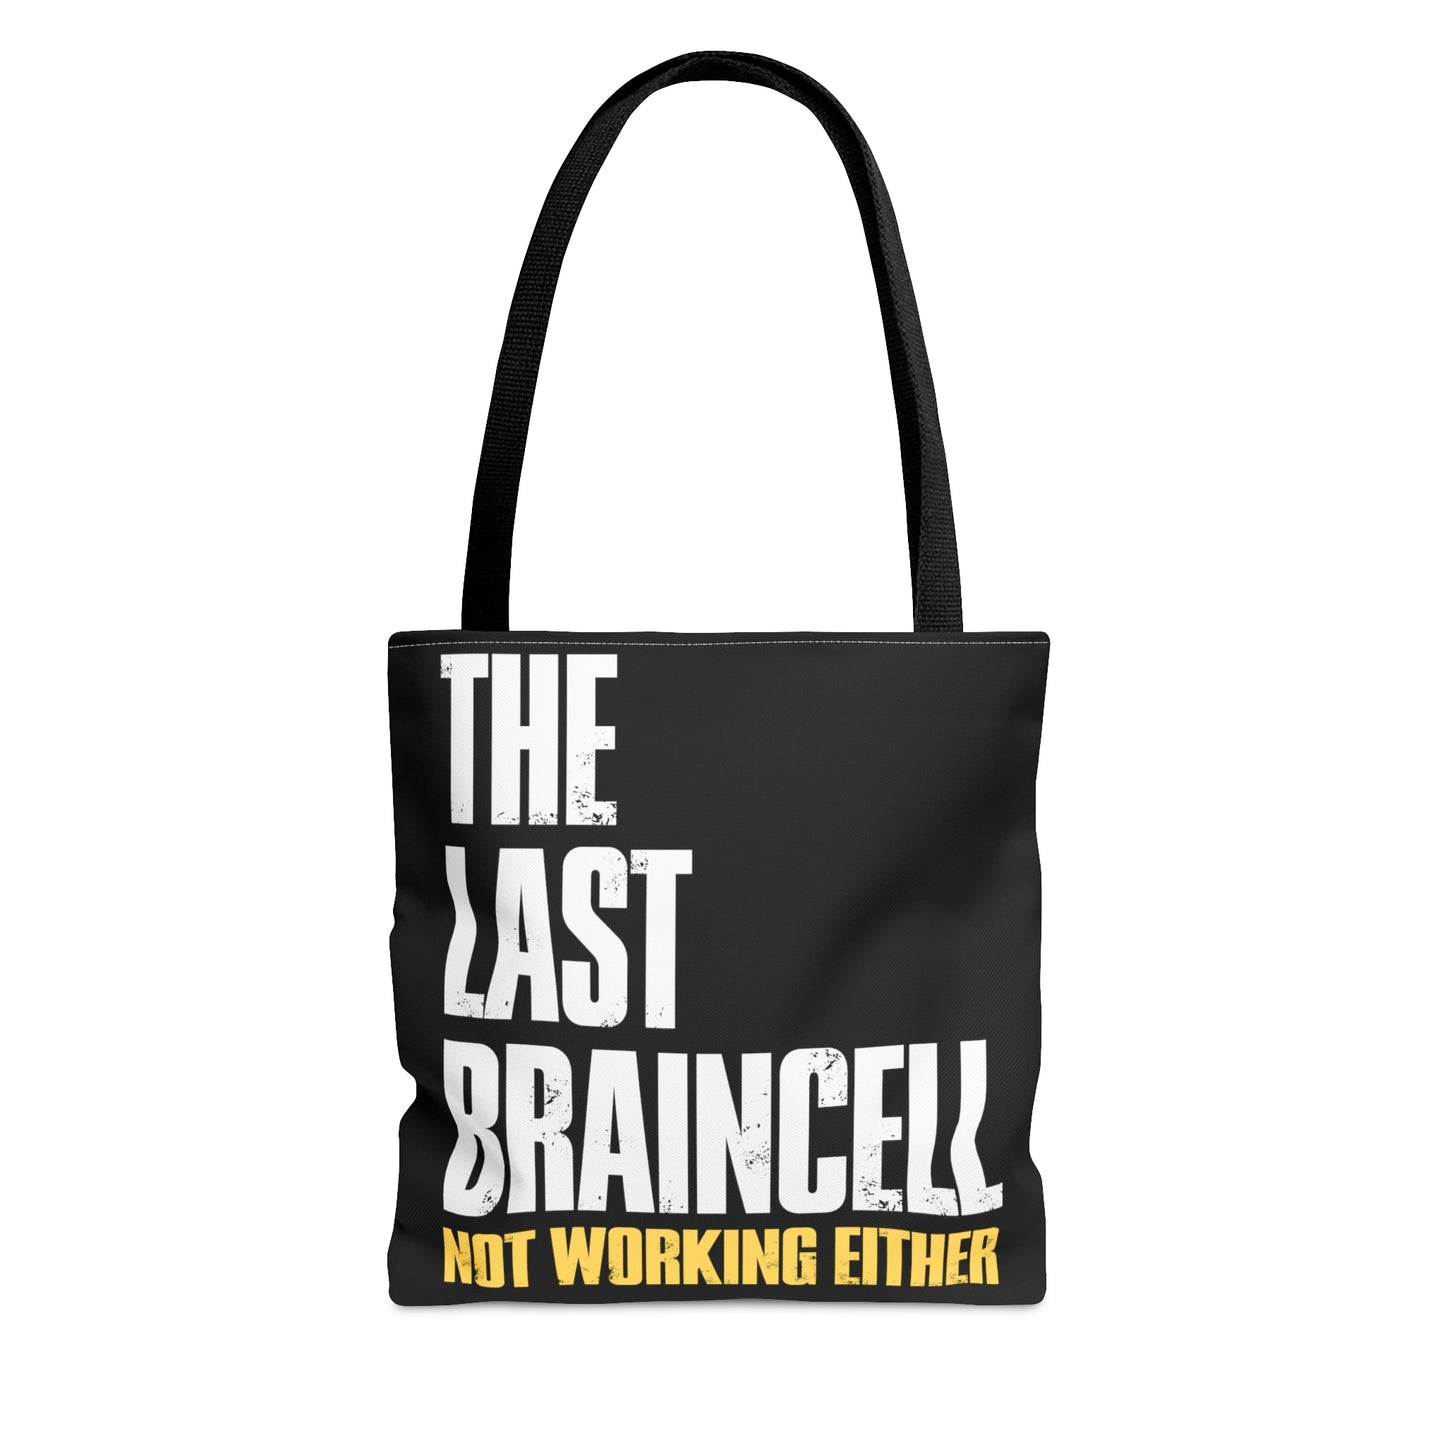 TLOU Tote Bag - The Last Braincell